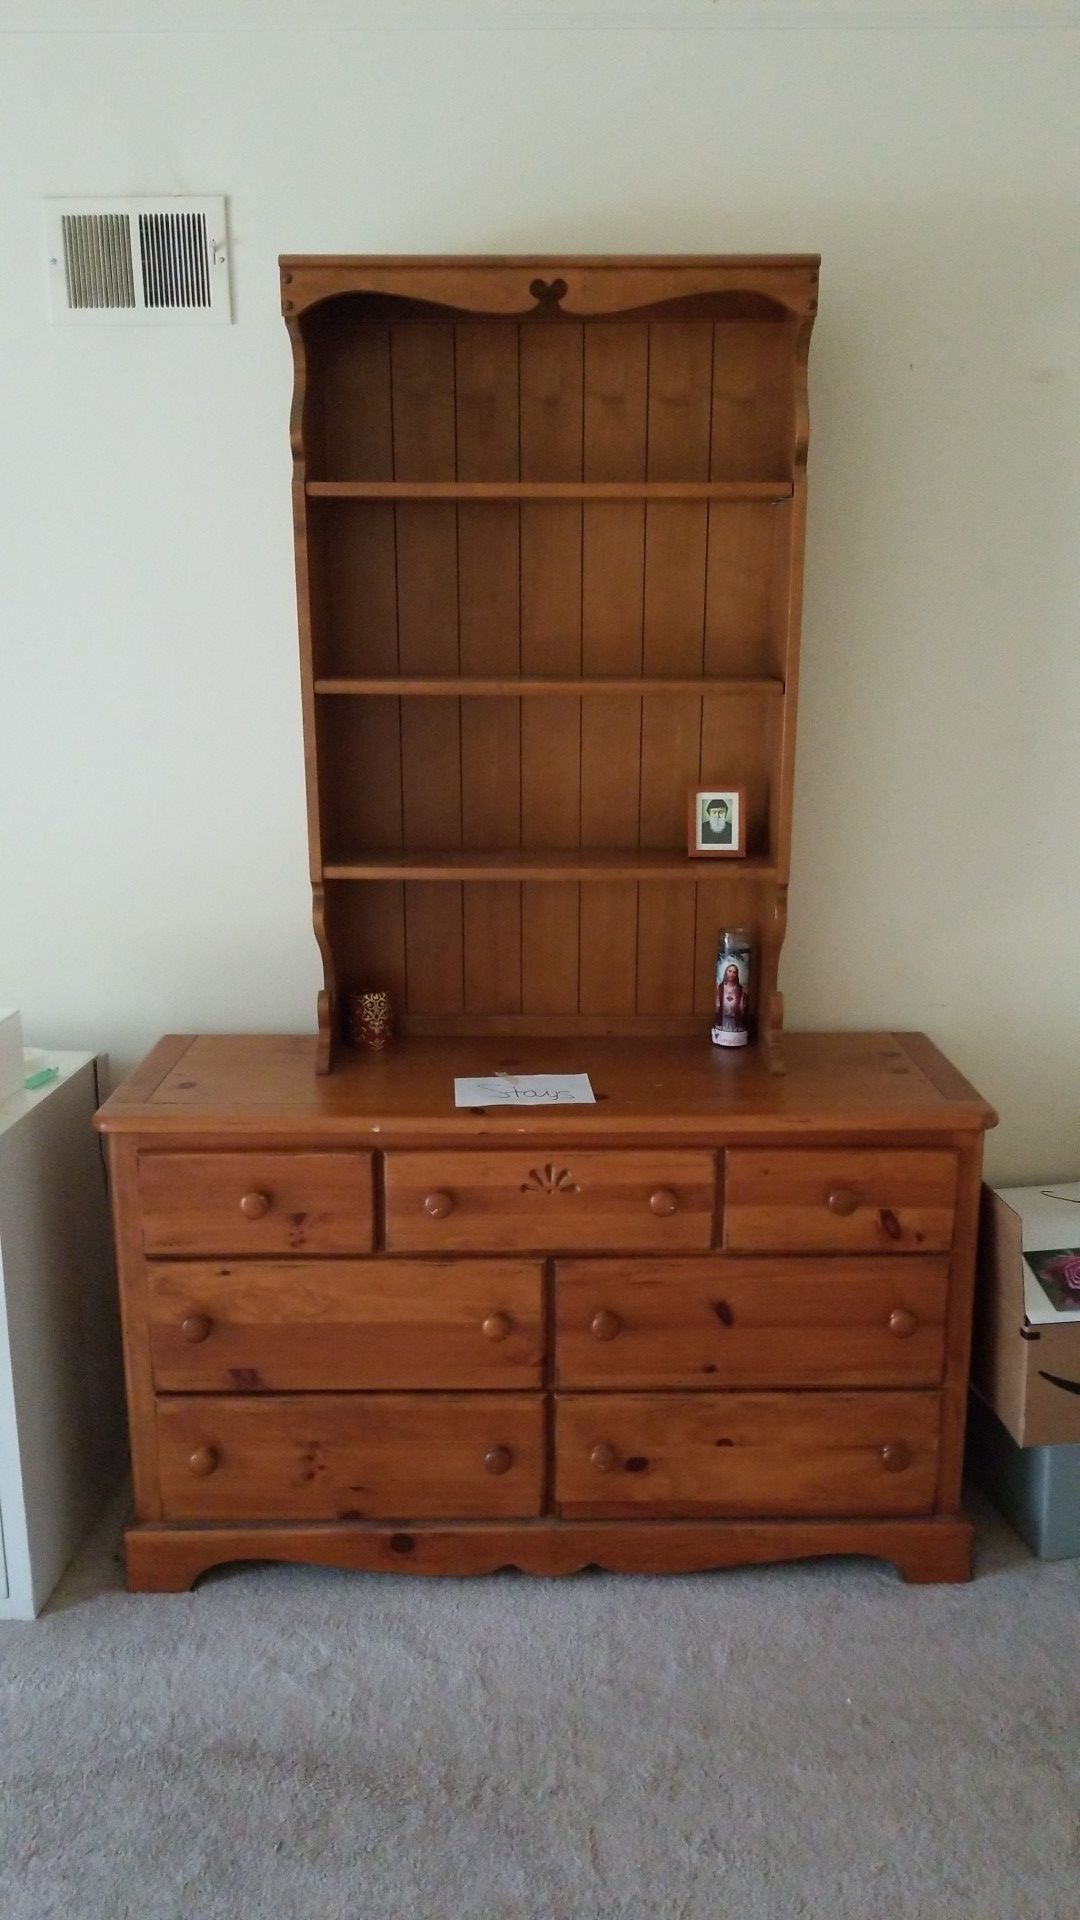 Wood dresser and bookshelf-hutch